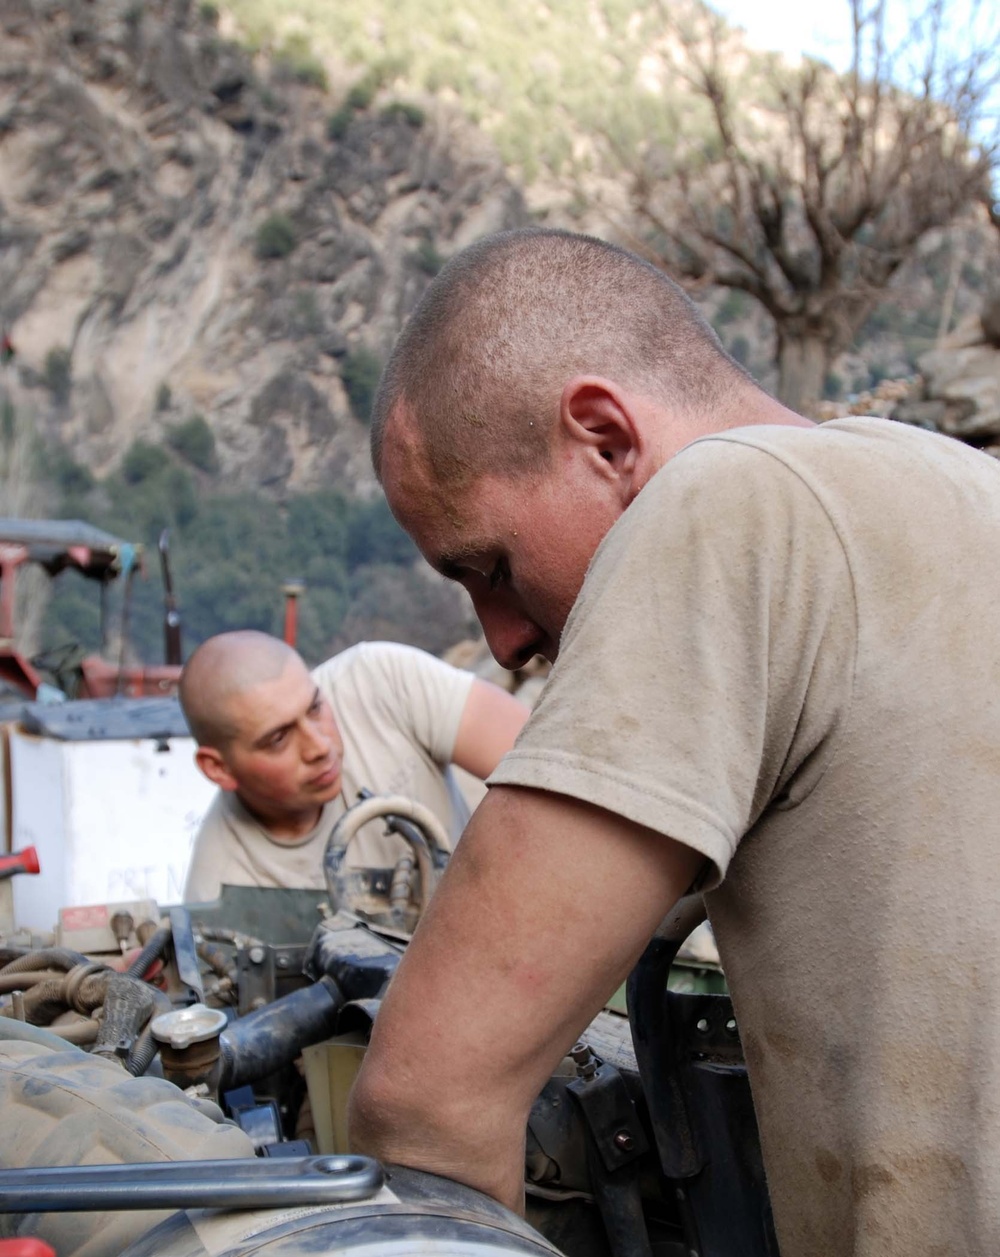 Mechanics battle Taliban, snow, terrain to keep vehicles working